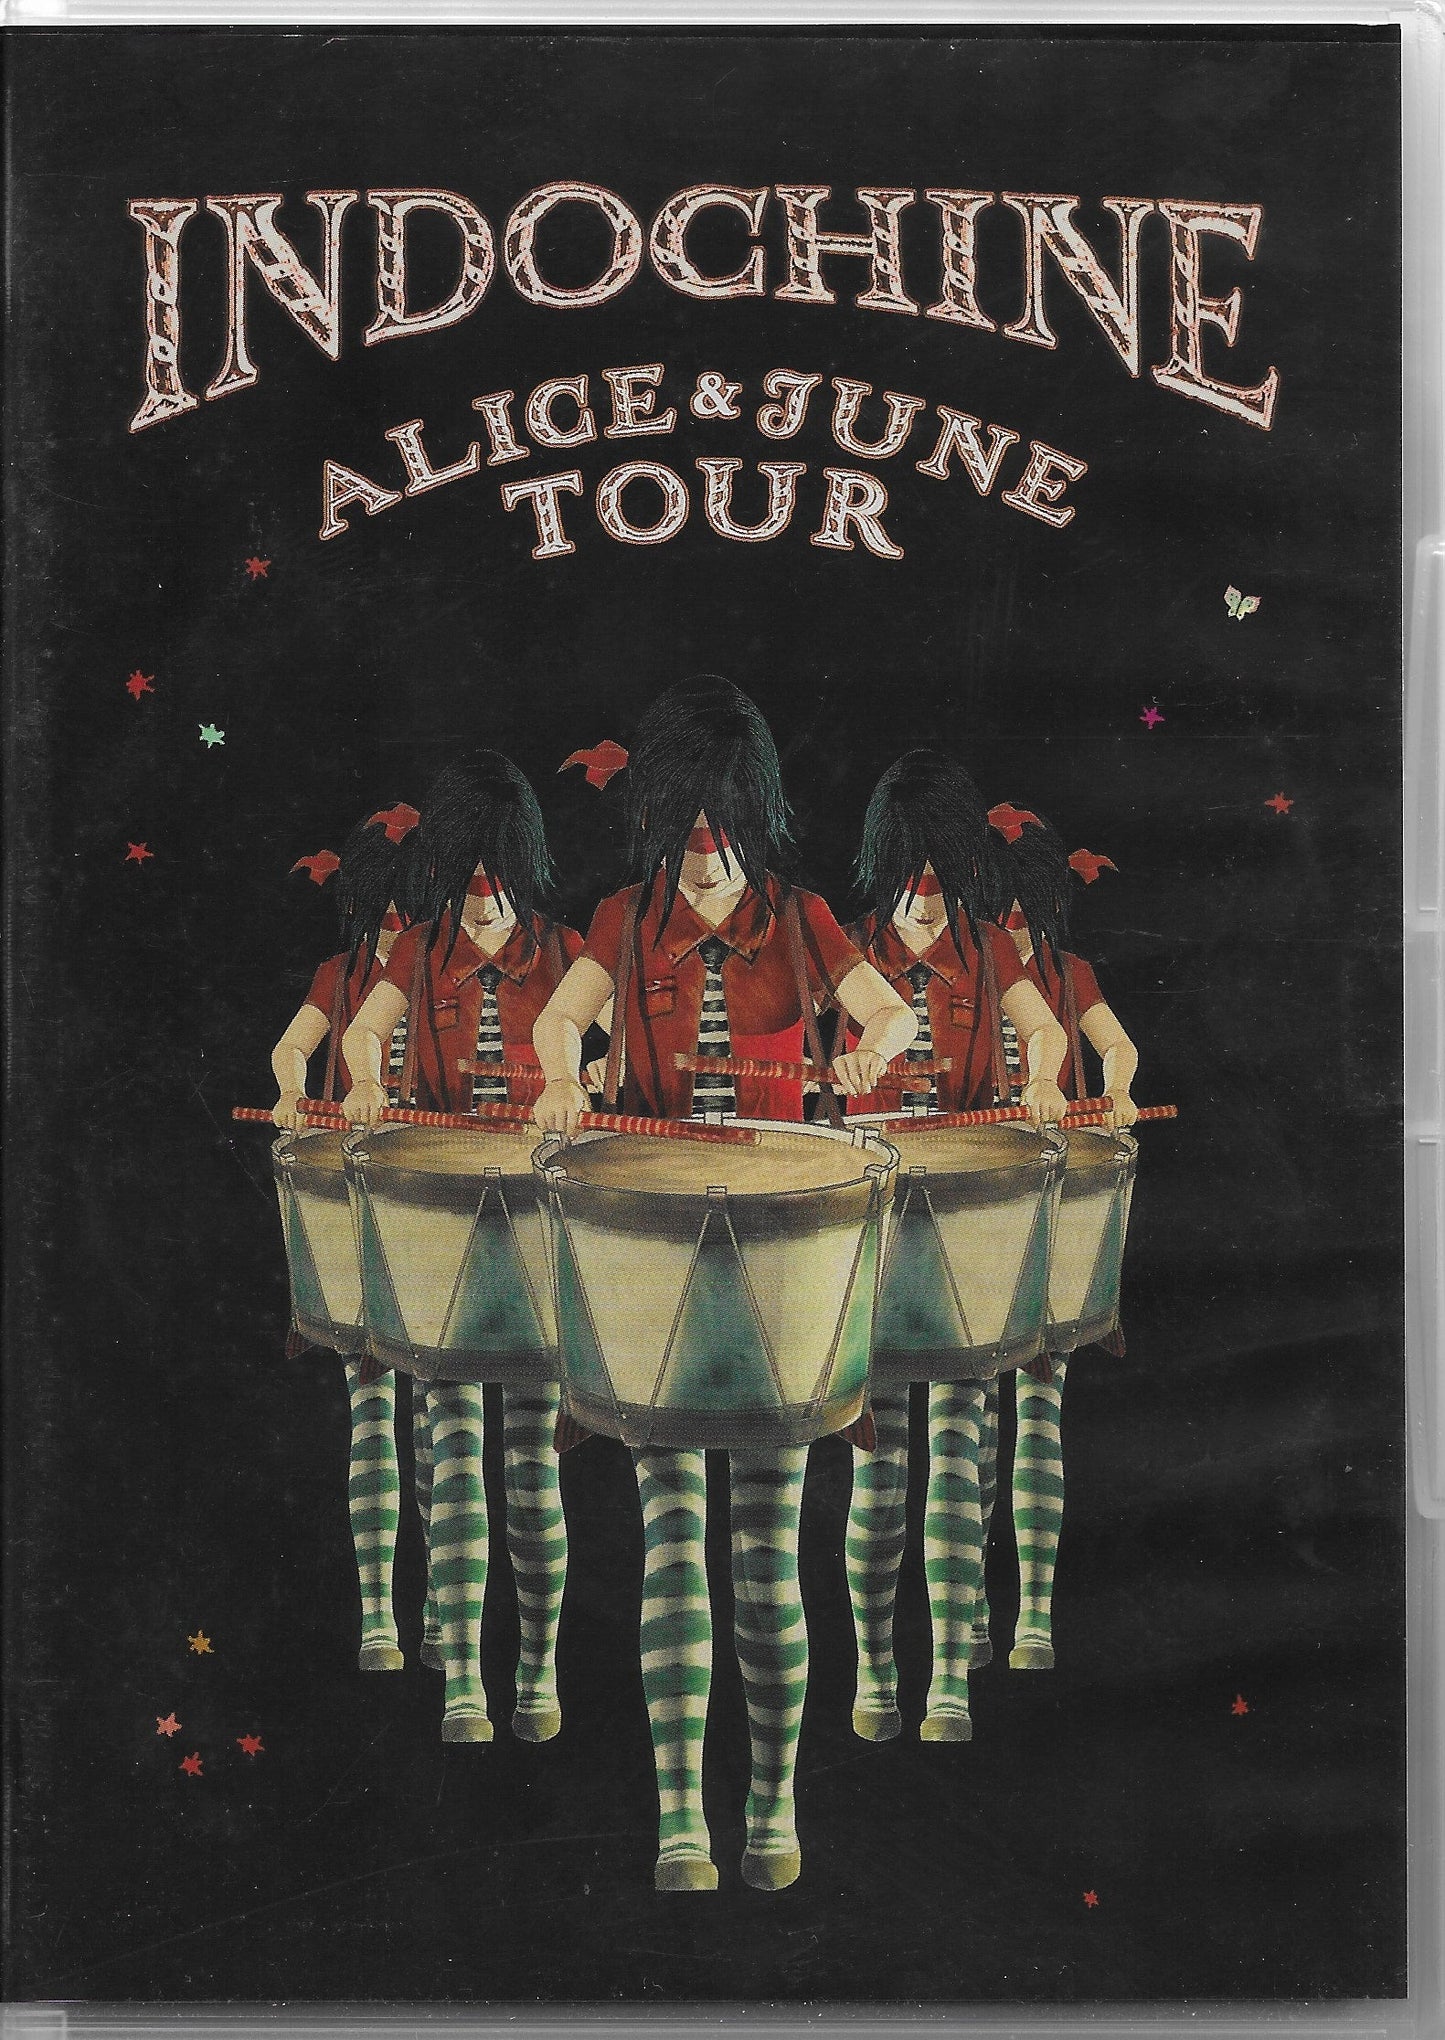 INDOCHINE - Alice & June Tour